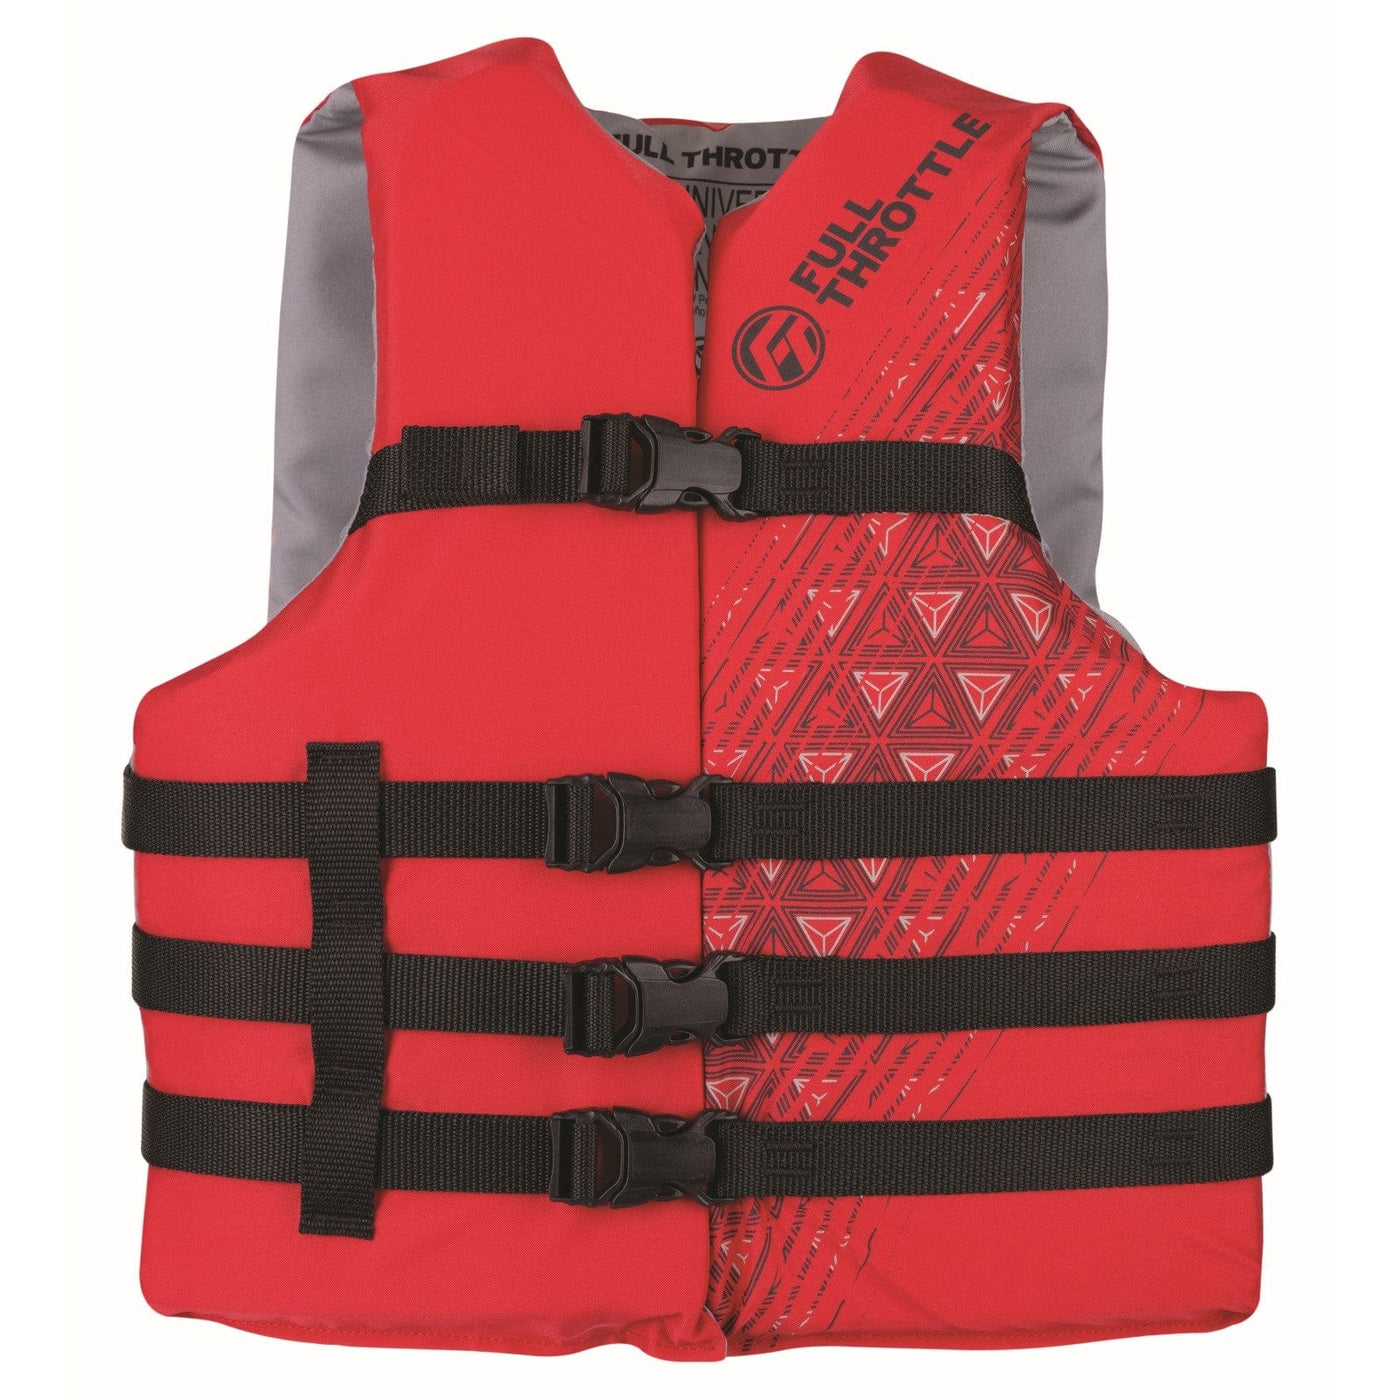 Full Throttle Full Throttle Adult Universal Ski Vest Oversize Red Marine And Water Sports